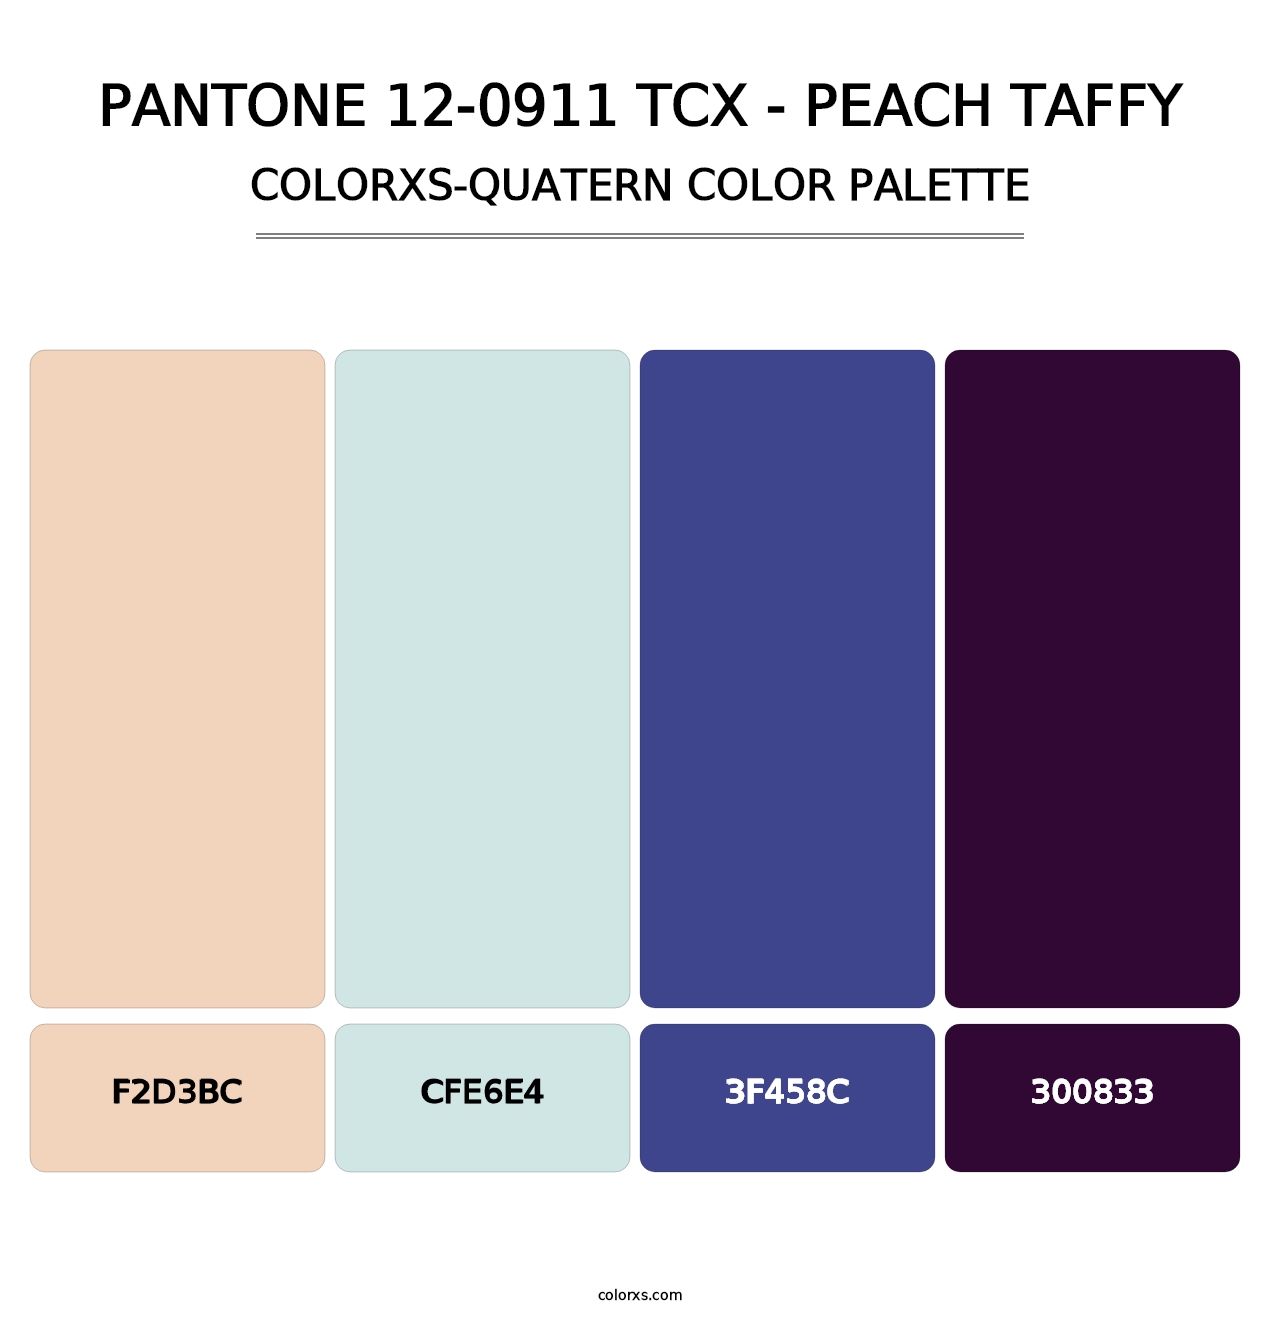 PANTONE 12-0911 TCX - Peach Taffy - Colorxs Quatern Palette